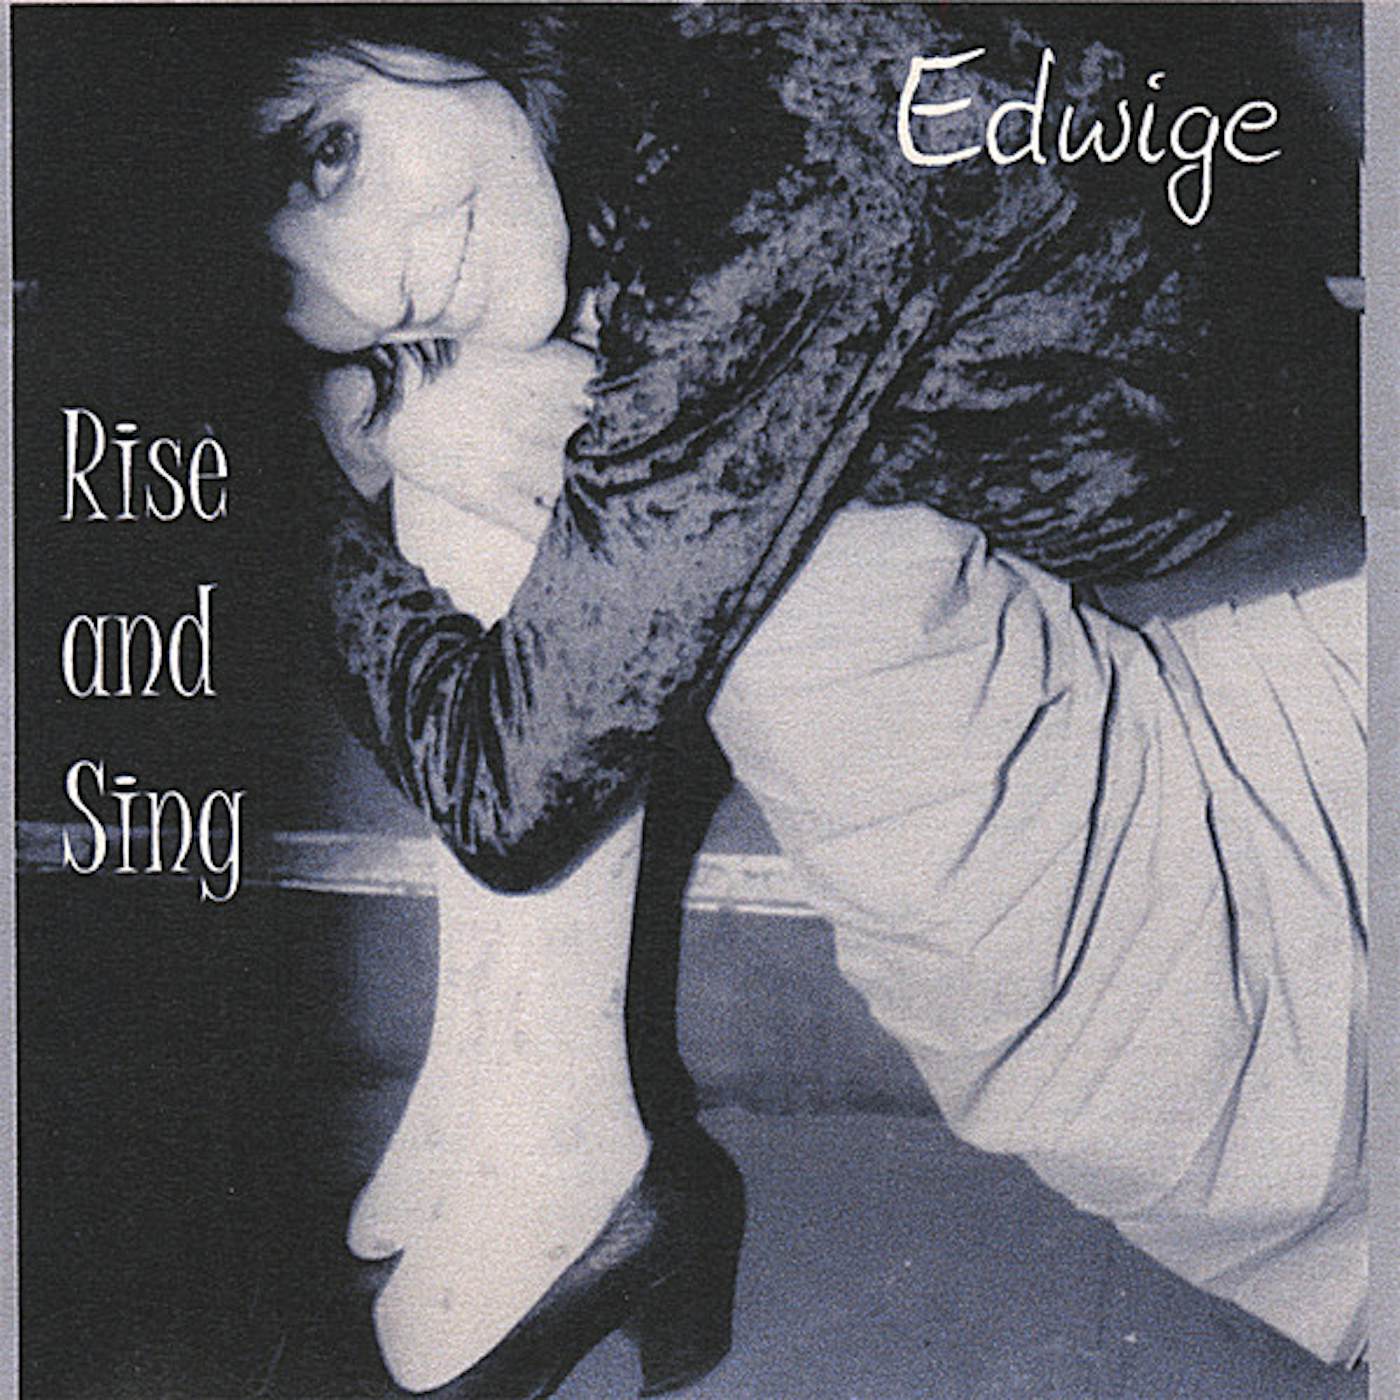 Edwige RISE & SING CD